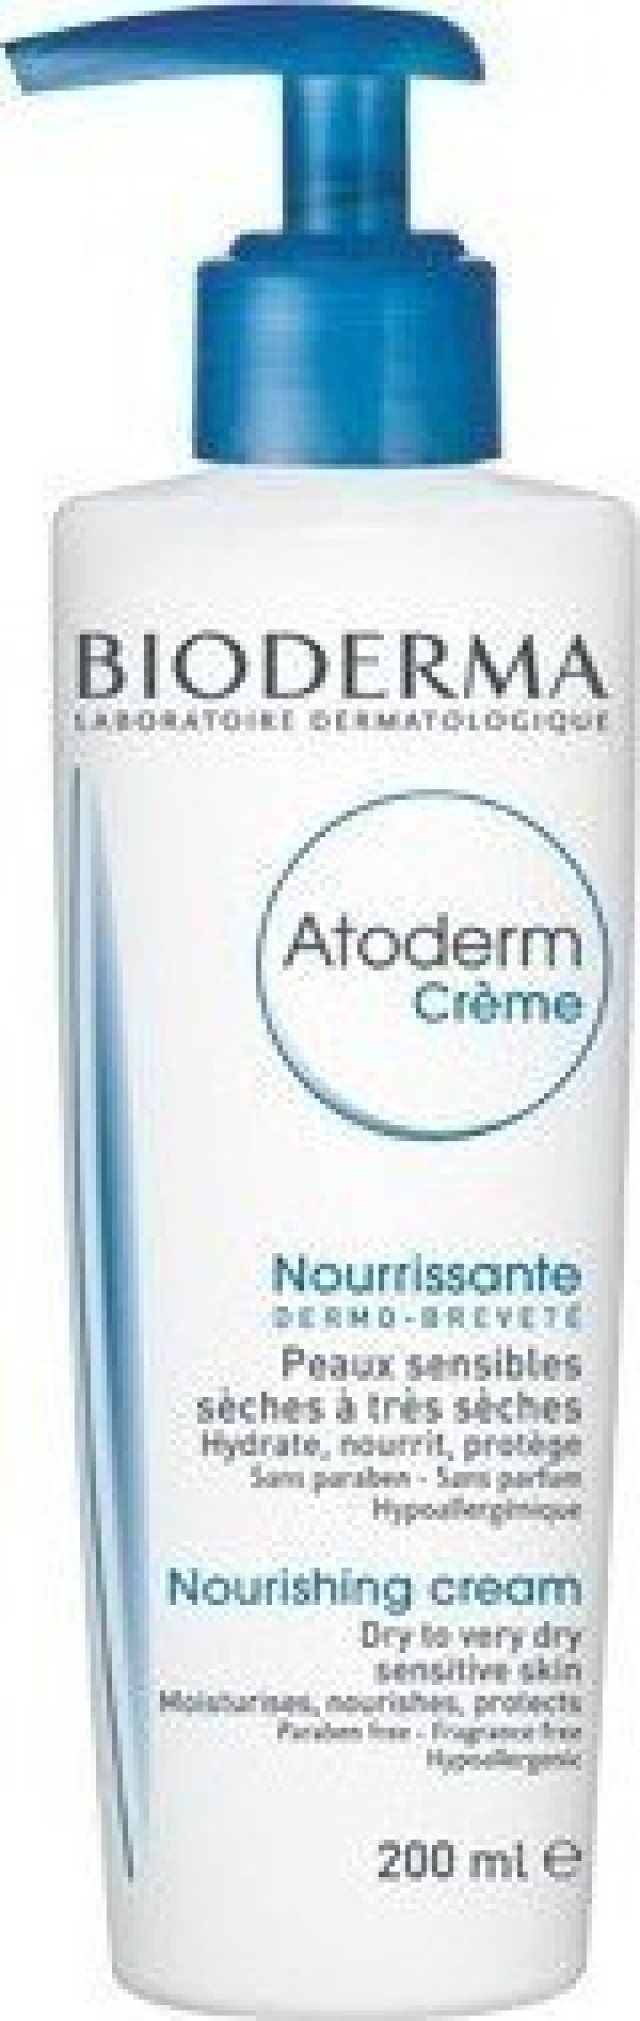 Bioderma Atoderm Creme / Cream, 200 ml